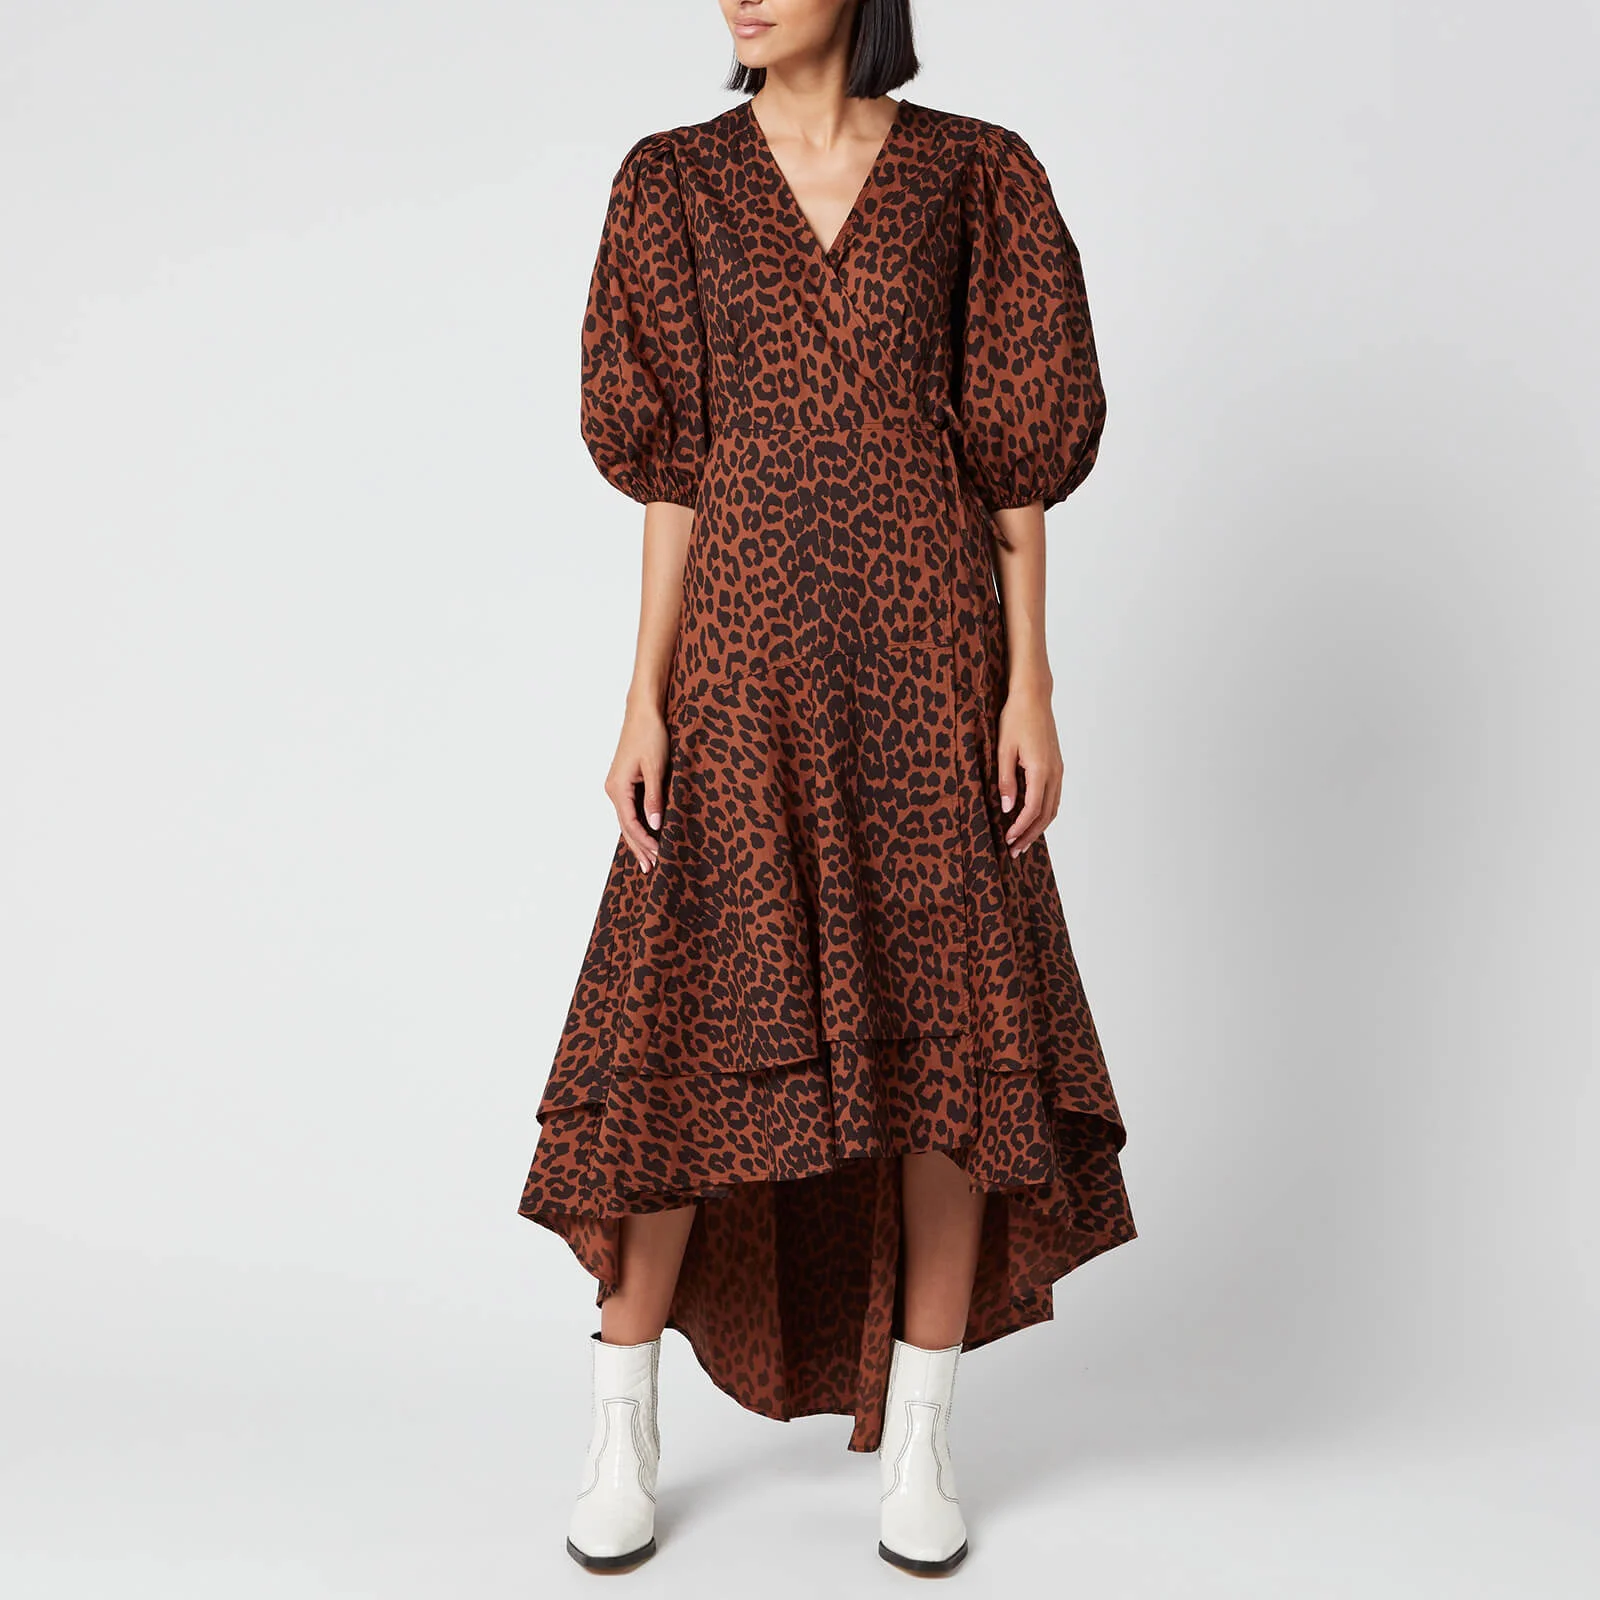 Ganni Women's Leopard Print Cotton Poplin Wrap Dress - Toffee Image 1